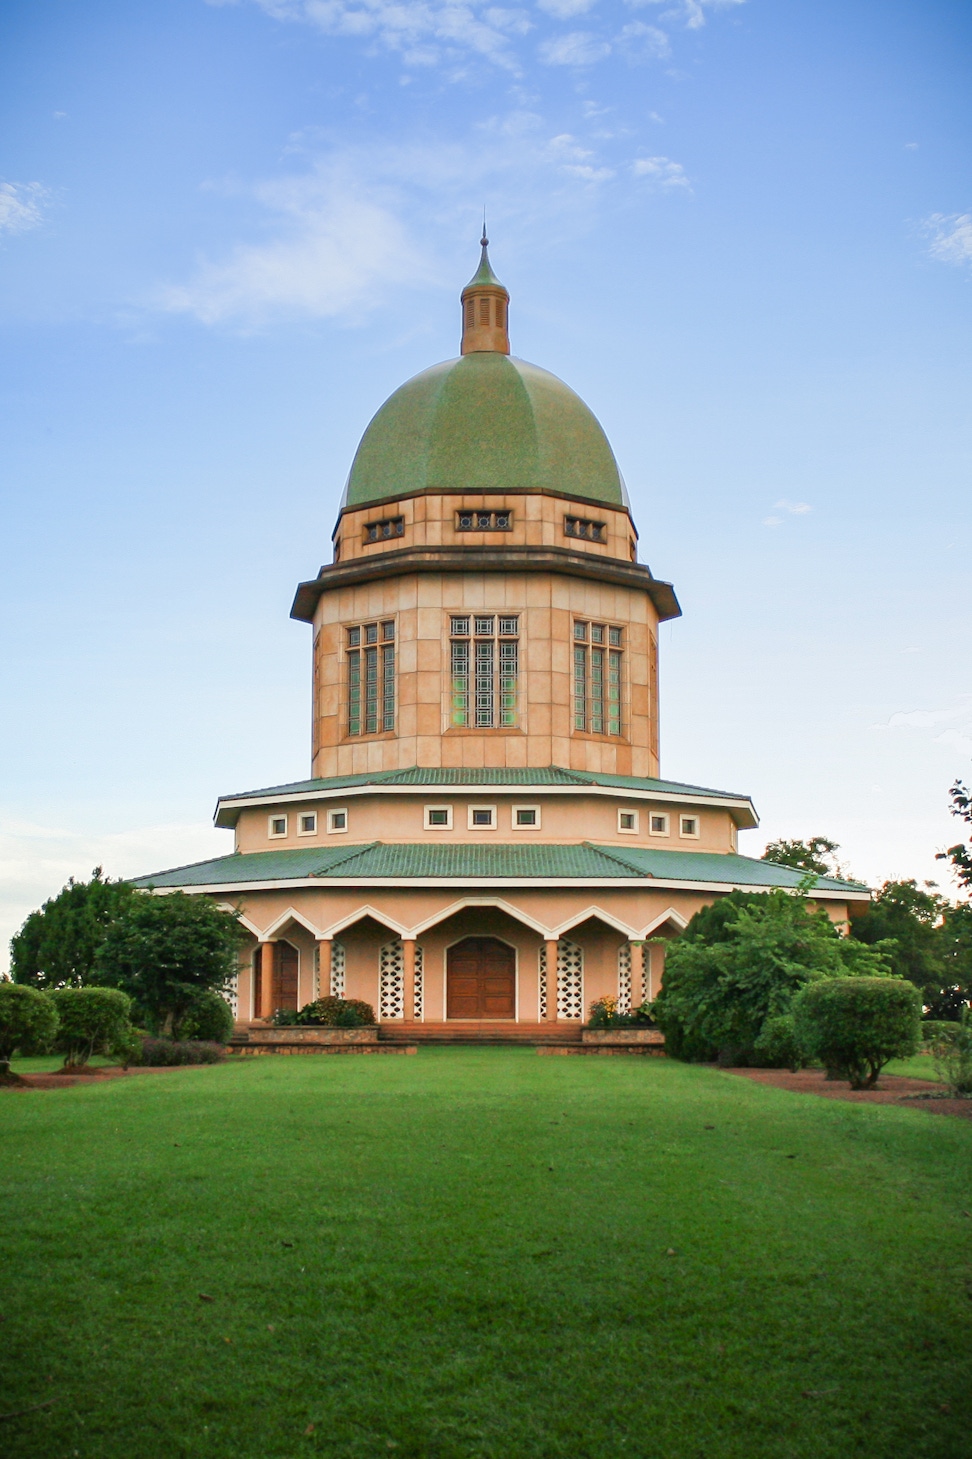 Continental Bahá’í House of Worship of Africa (Kampala, Uganda)